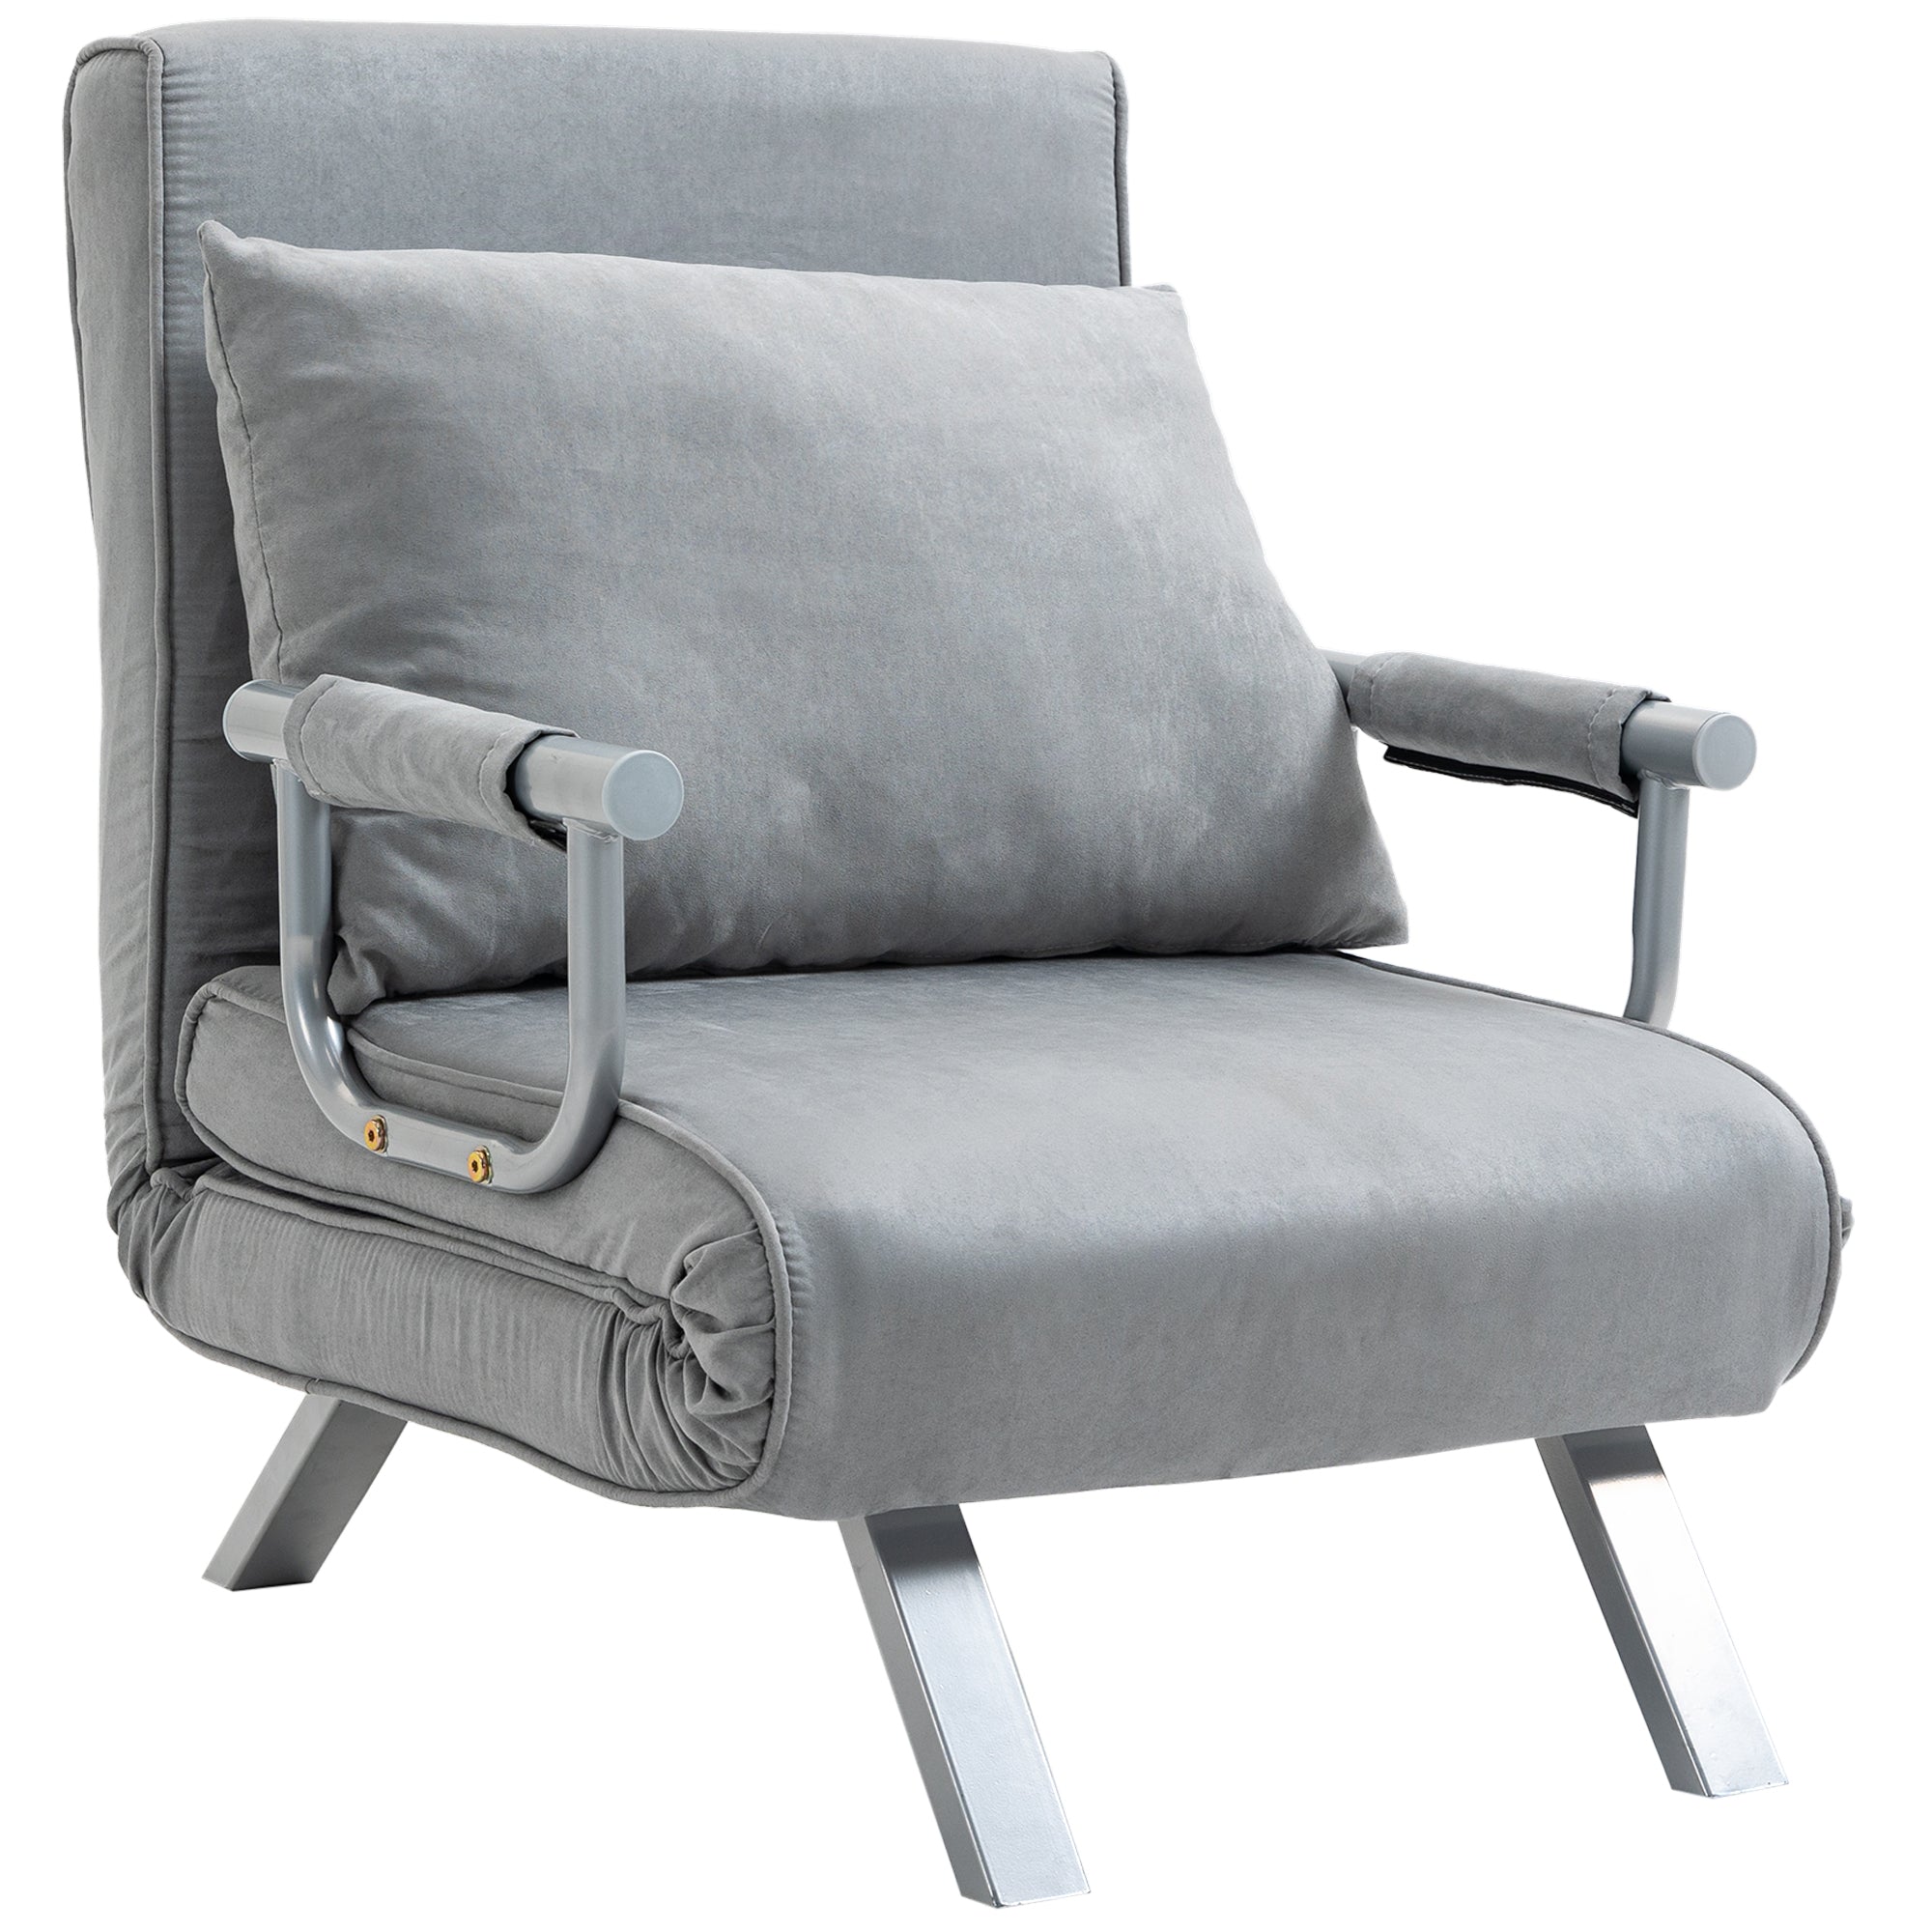 HOMCOM Sofa Bed Foldable Portable Armchair Sleeper Lounge with Pillow Light Grey  | TJ Hughes